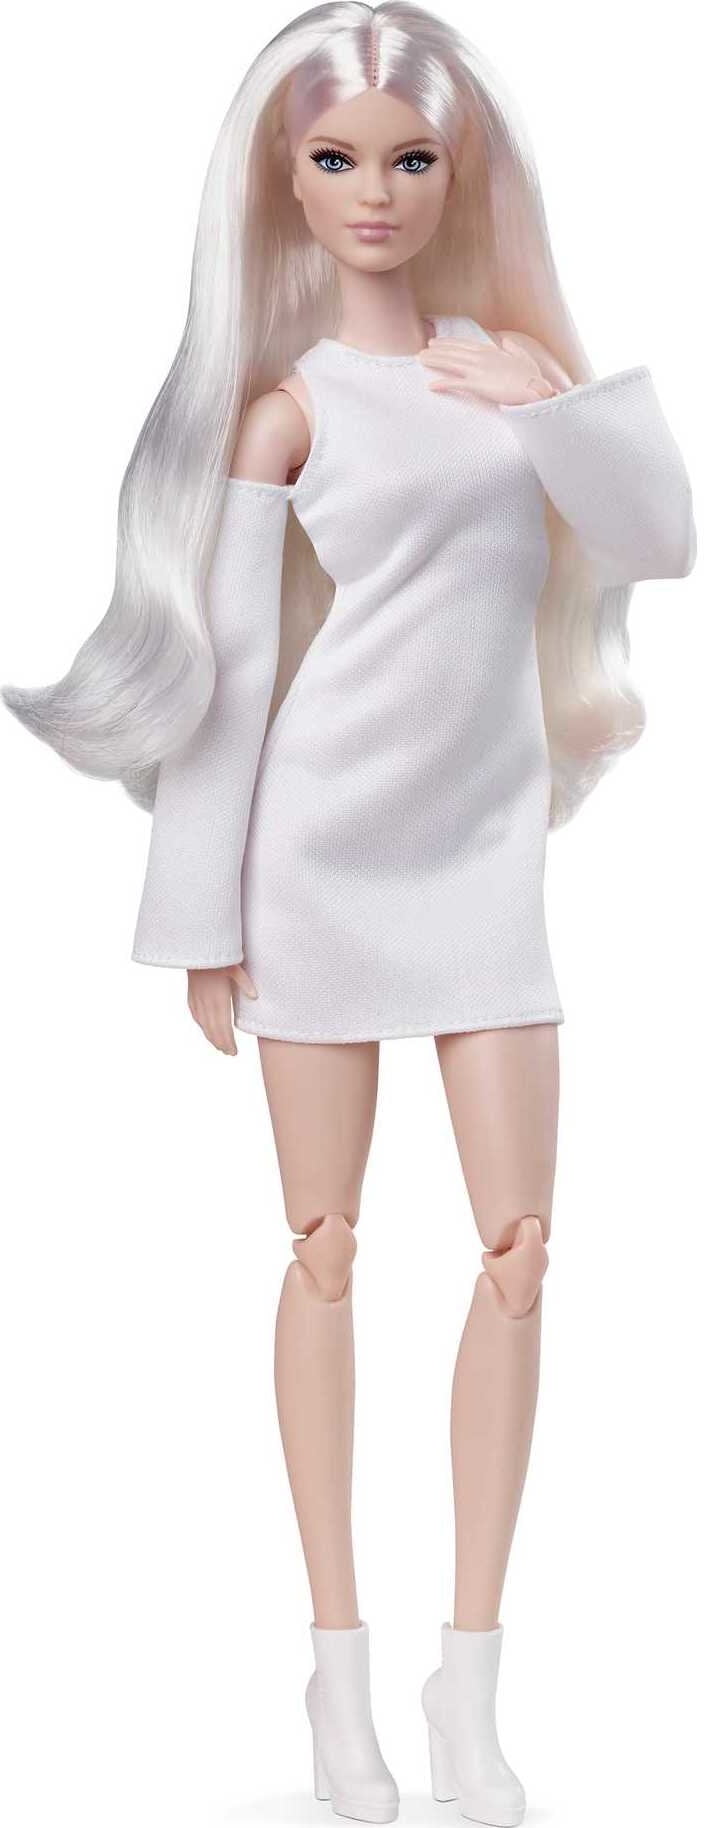 Barbie in white dress